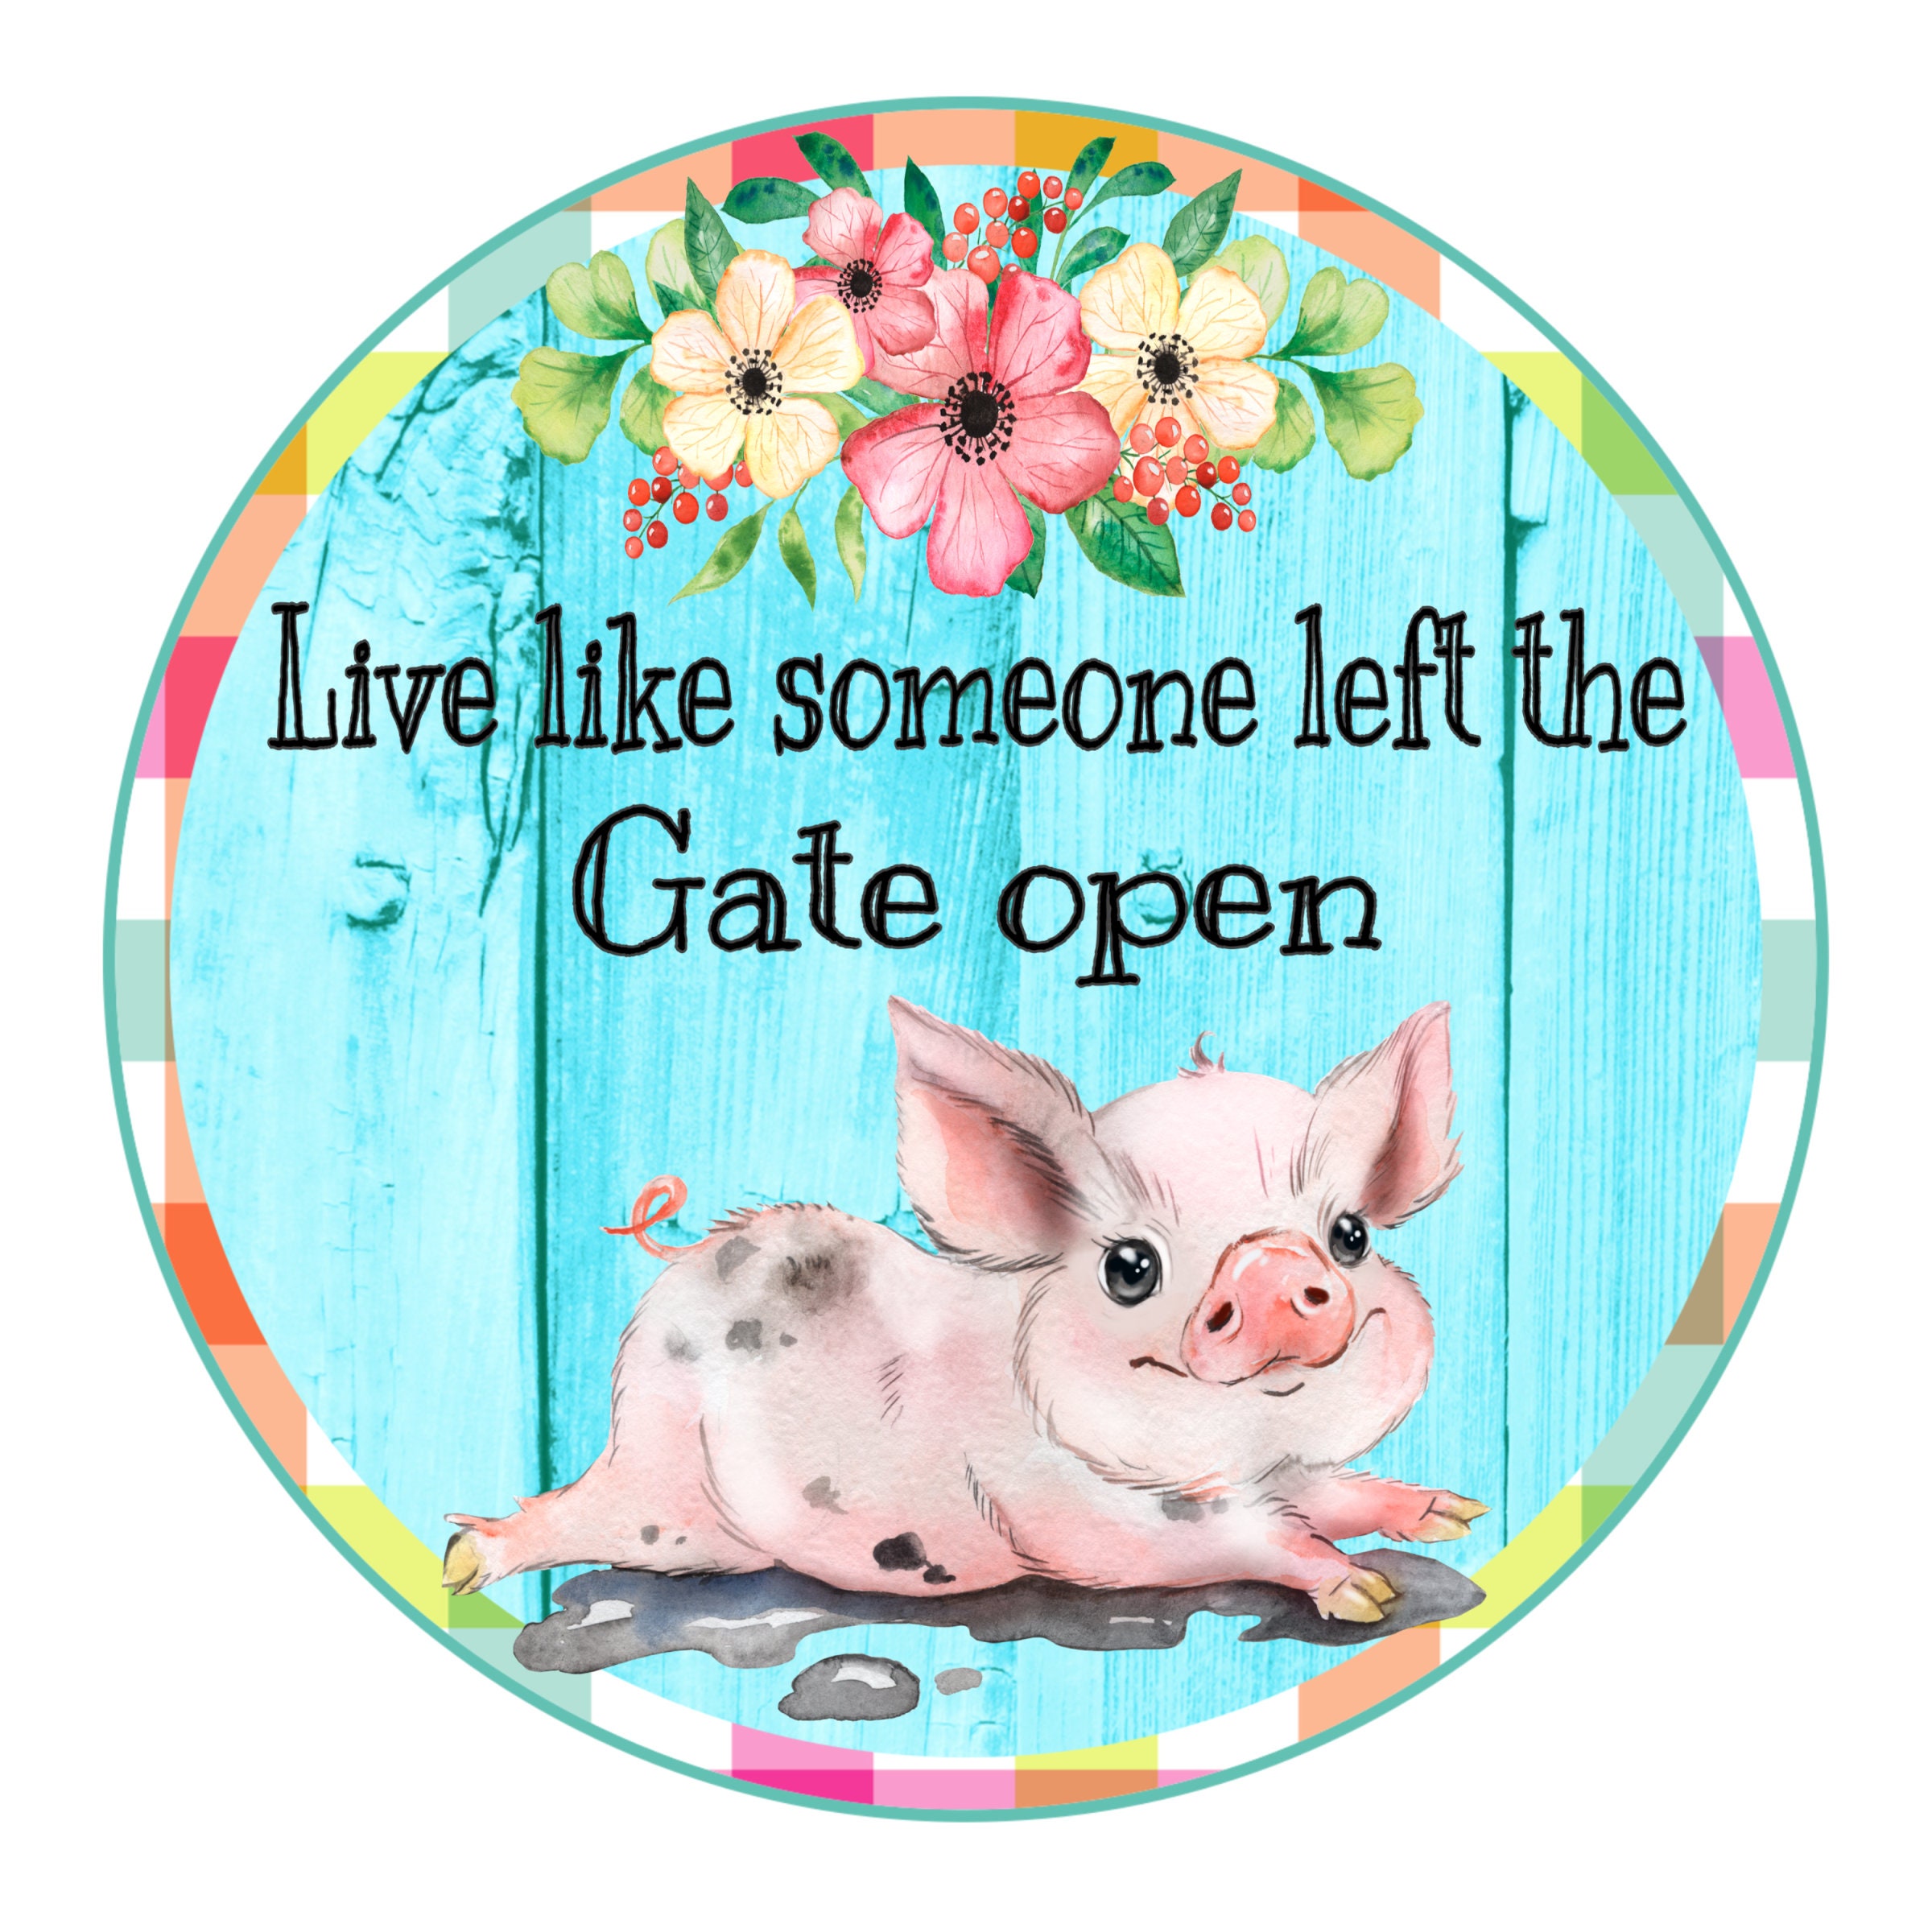 Metal Wreath Sign Welcome Pig Sign Door Hanger Live Like Someone Left the Gate Open Pig Theme Sign Pig Sign Pig Decor